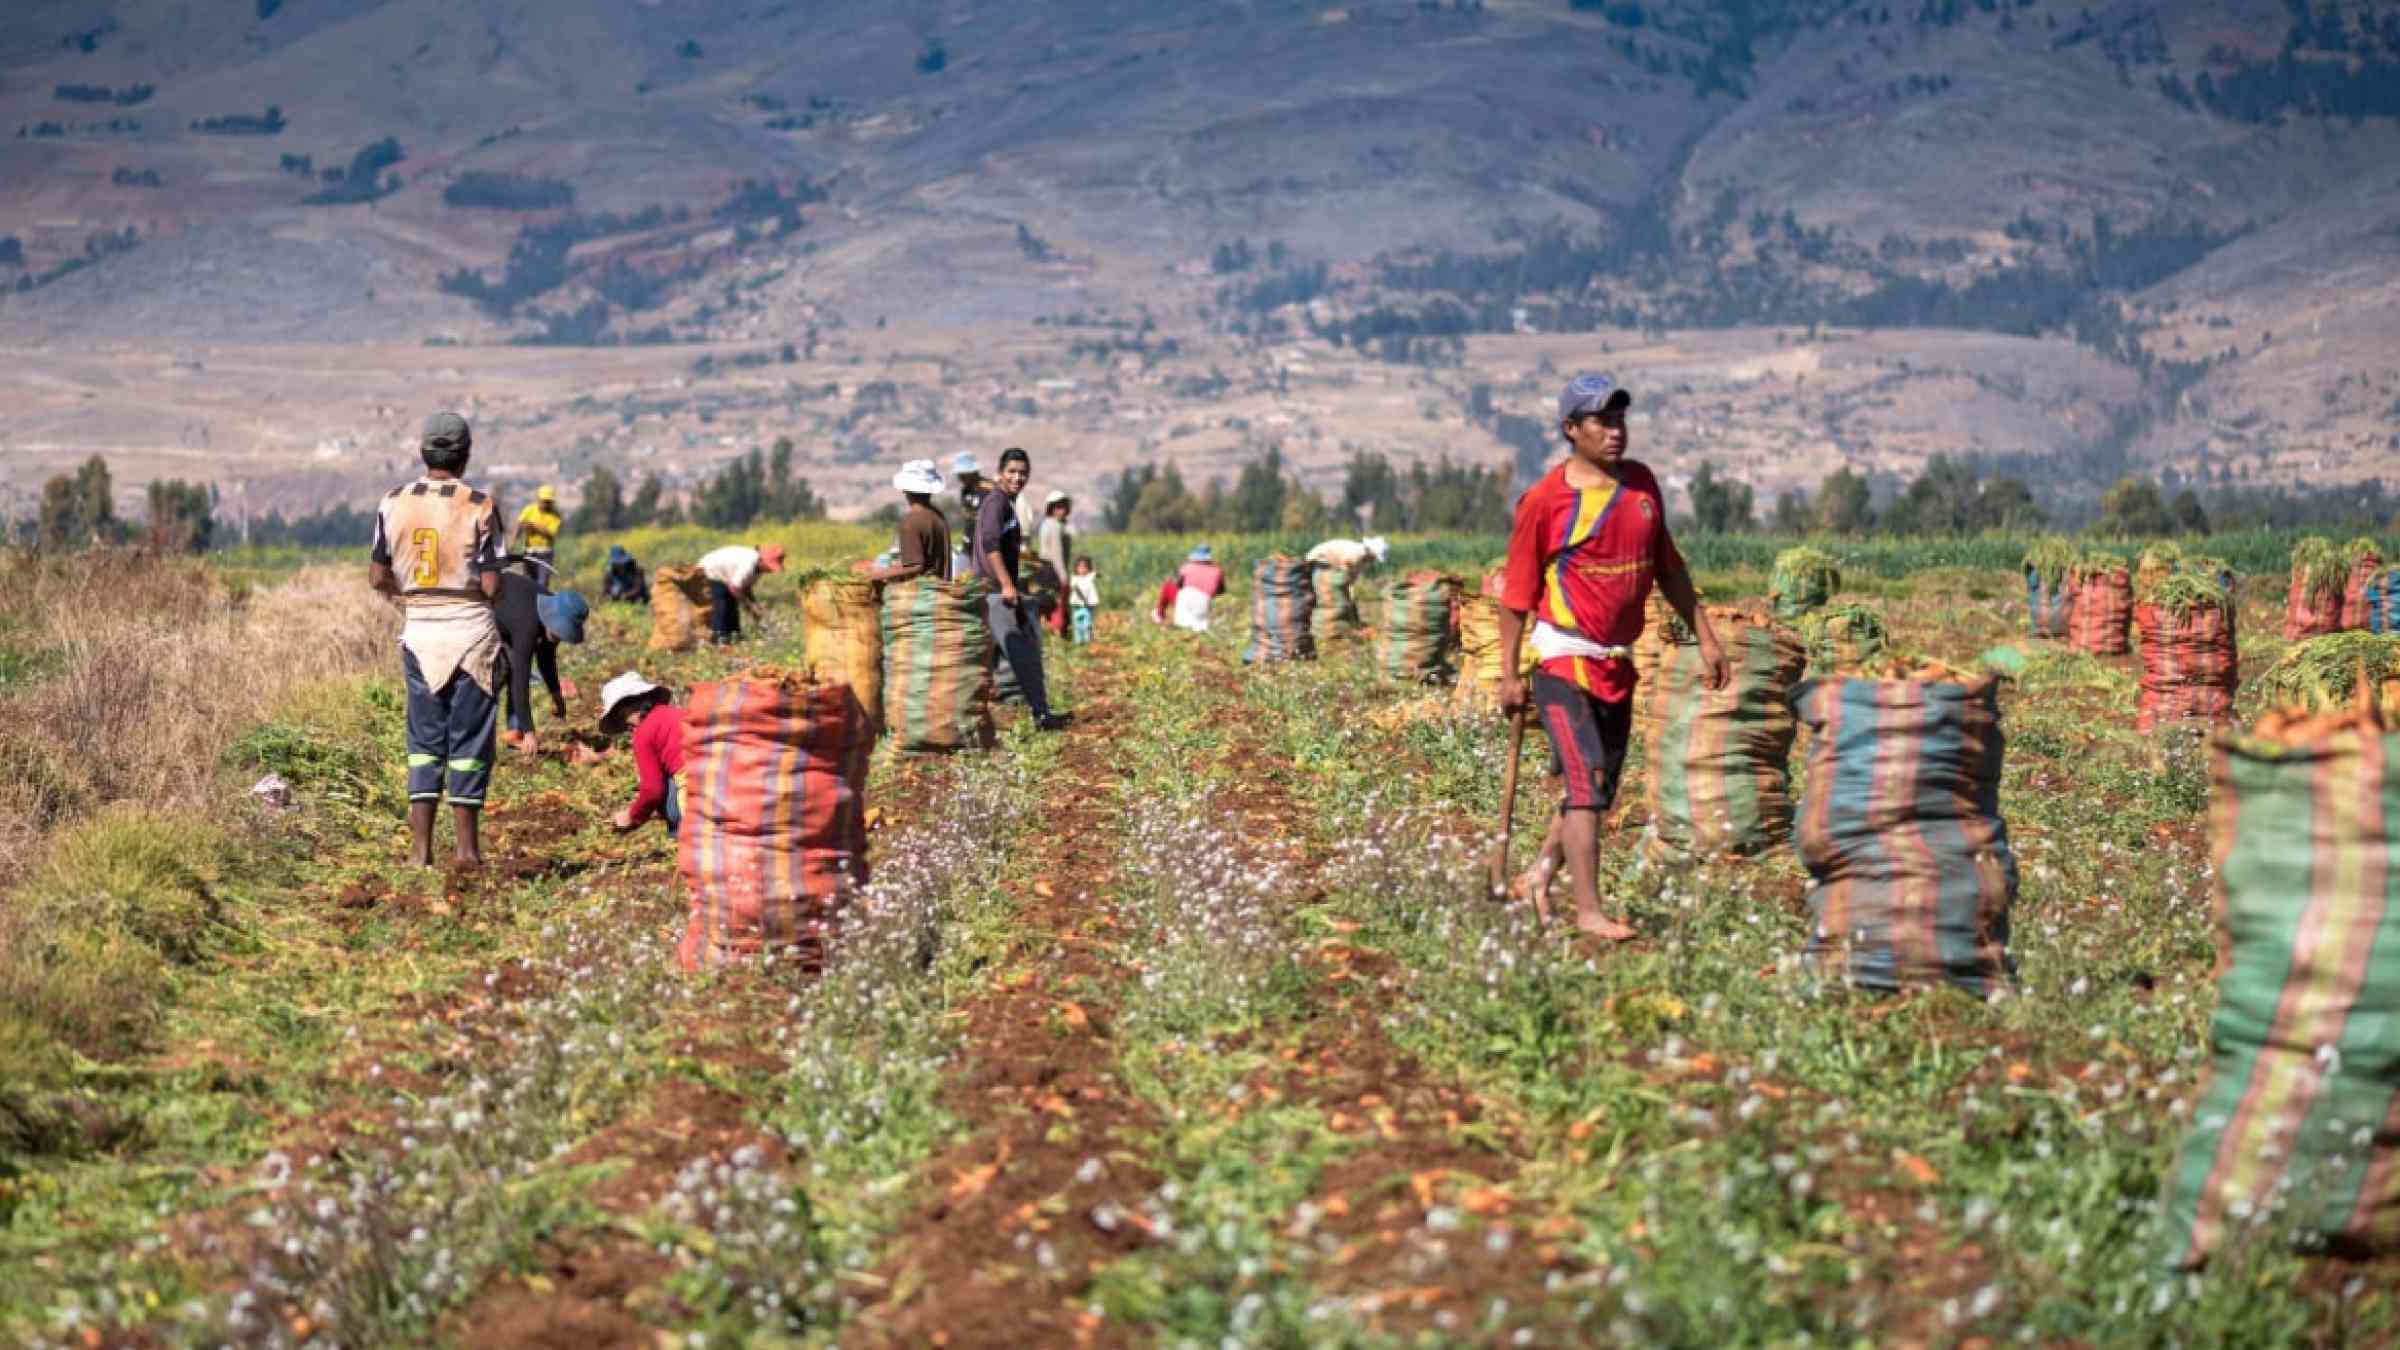 Several men harvesting in a field